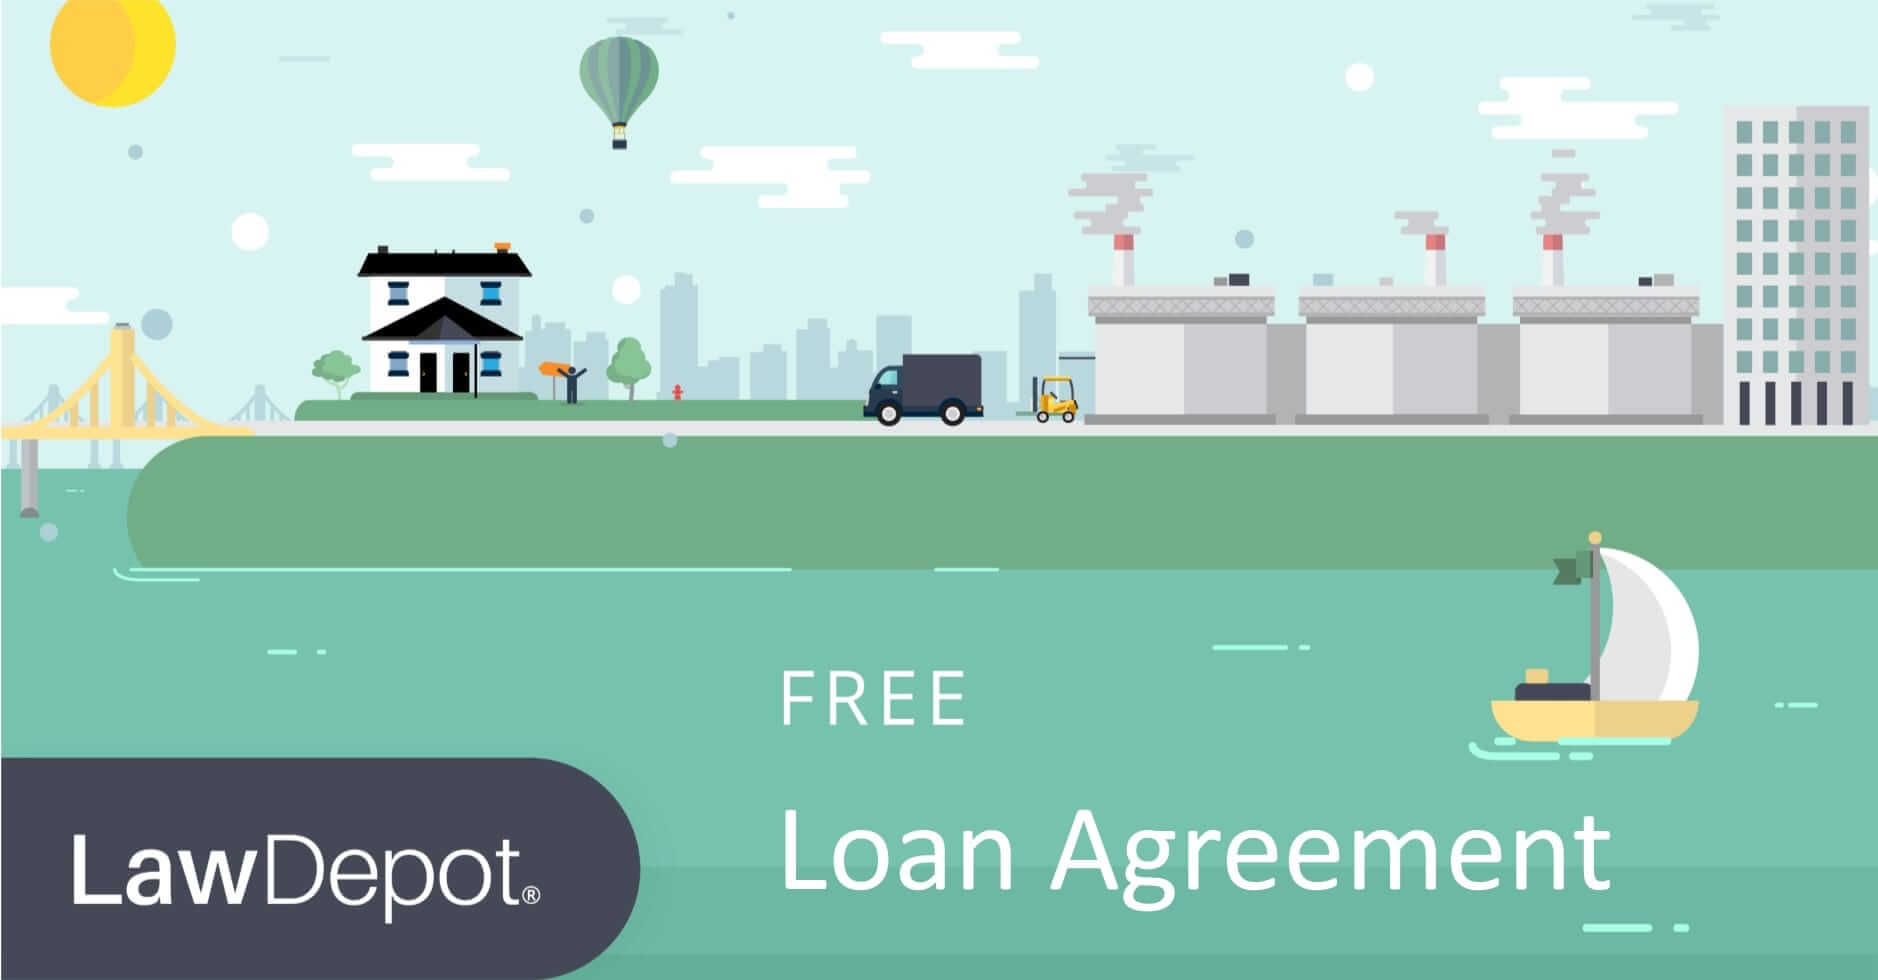 Intercompany Loan Agreement Free Loan Agreement Create Download And Print Lawdepot Us